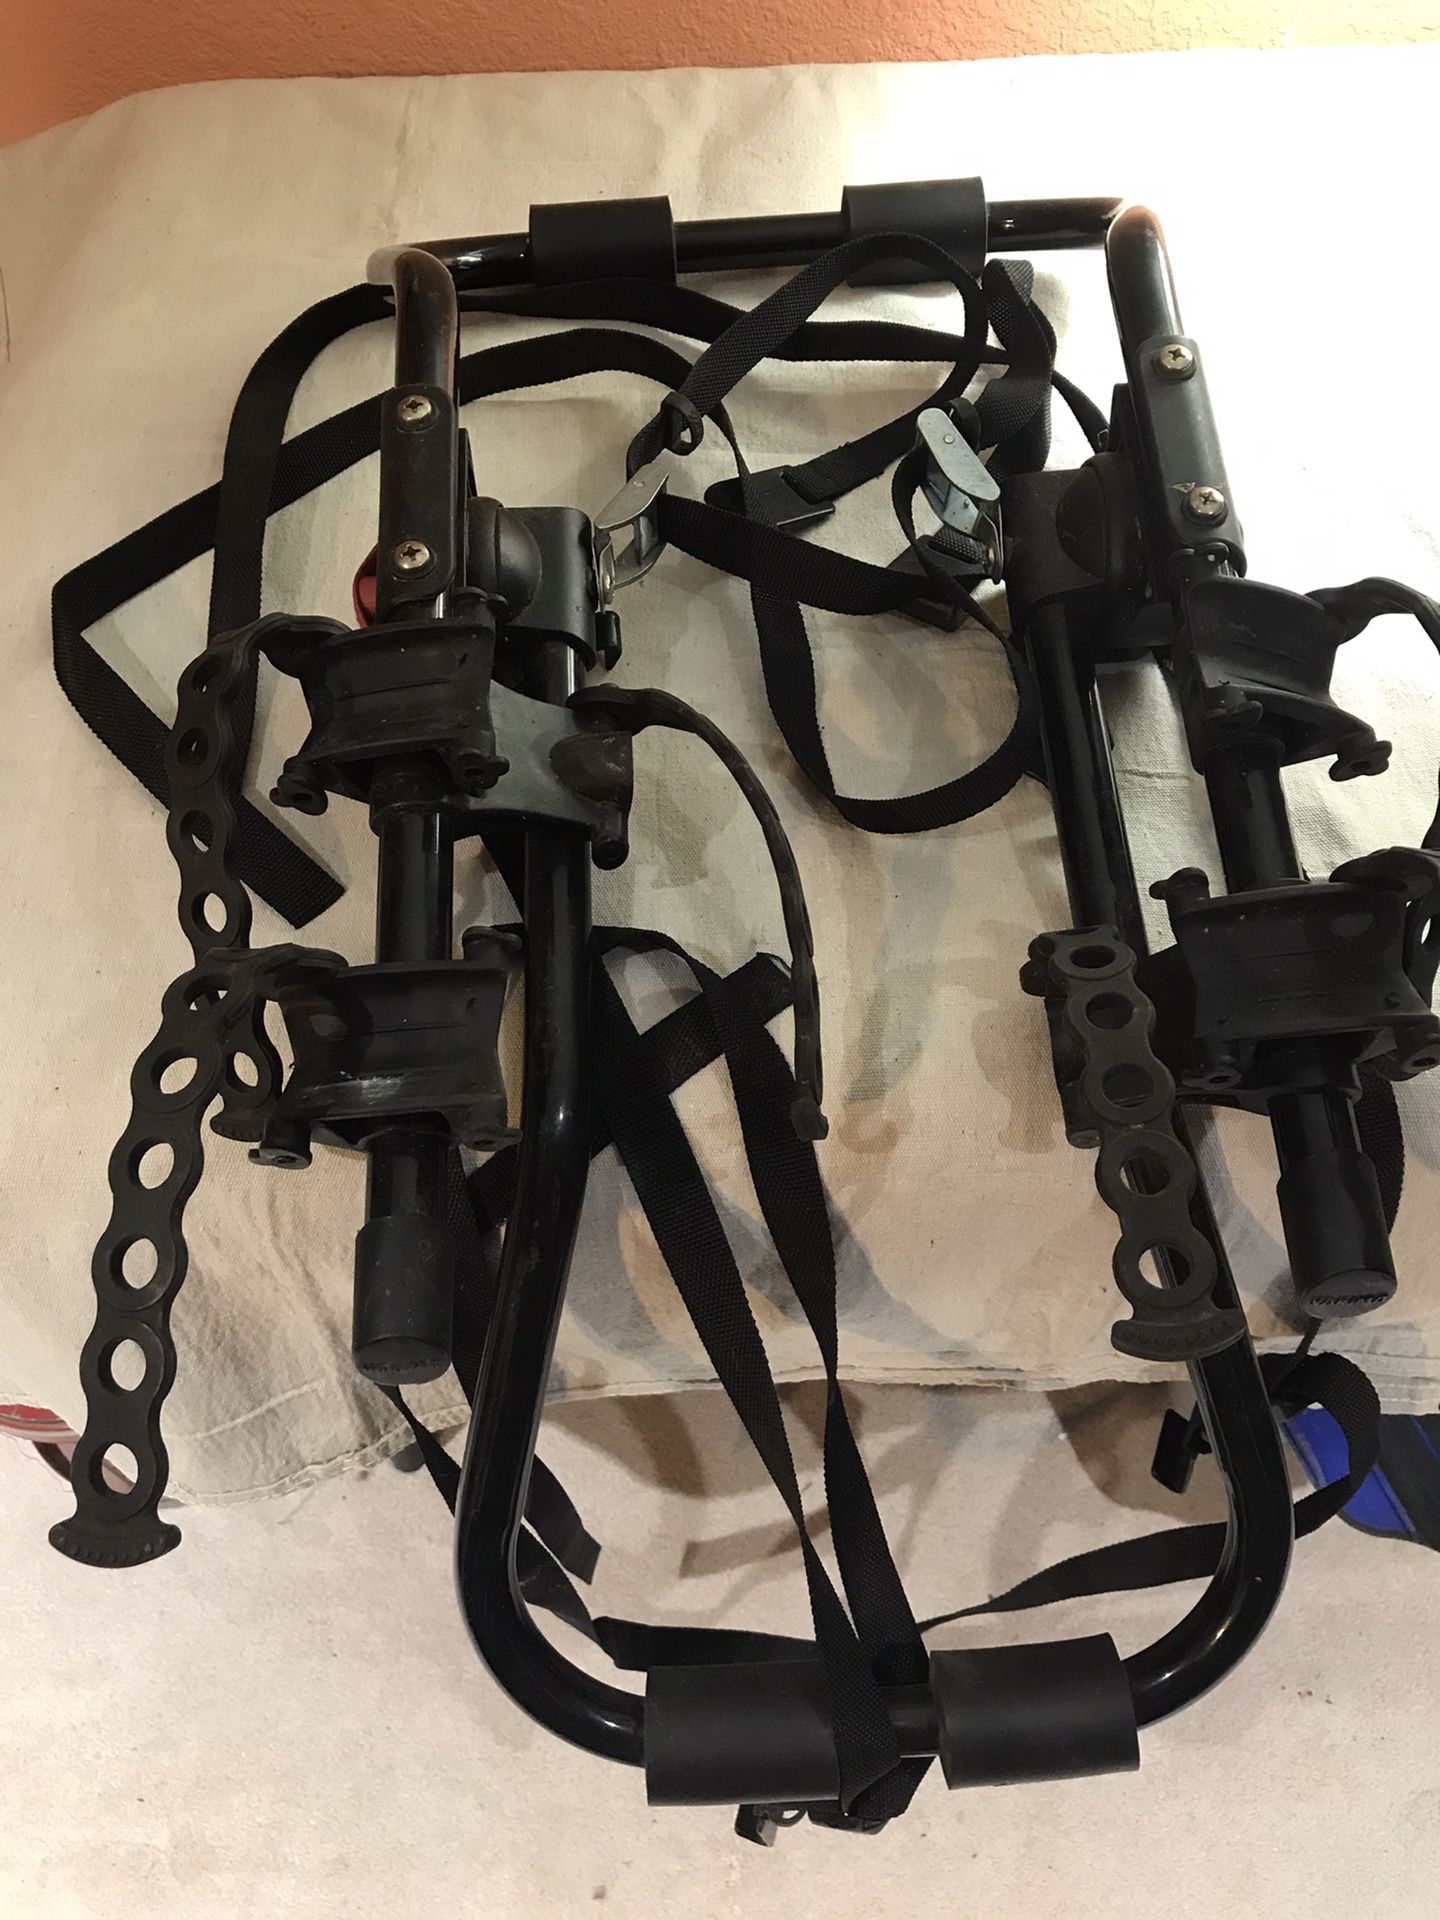 Yakama Bike rack, trunk- mount - holds two bikes